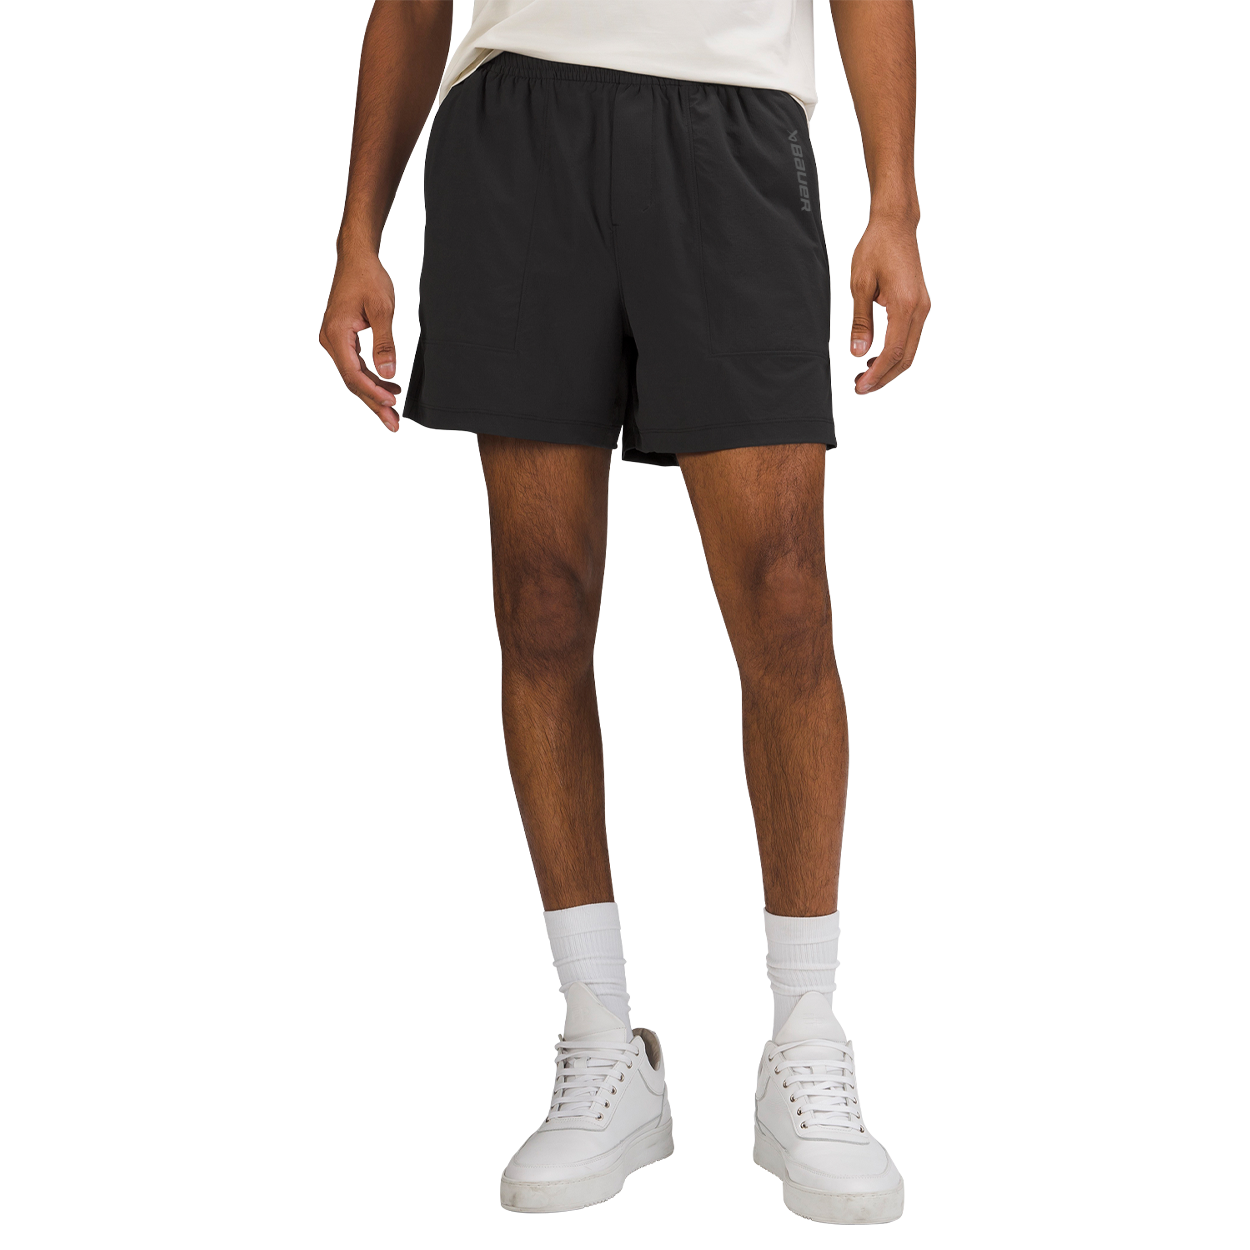 Bowline Short 5 *Woven Men's Shorts Lululemon, 54% OFF